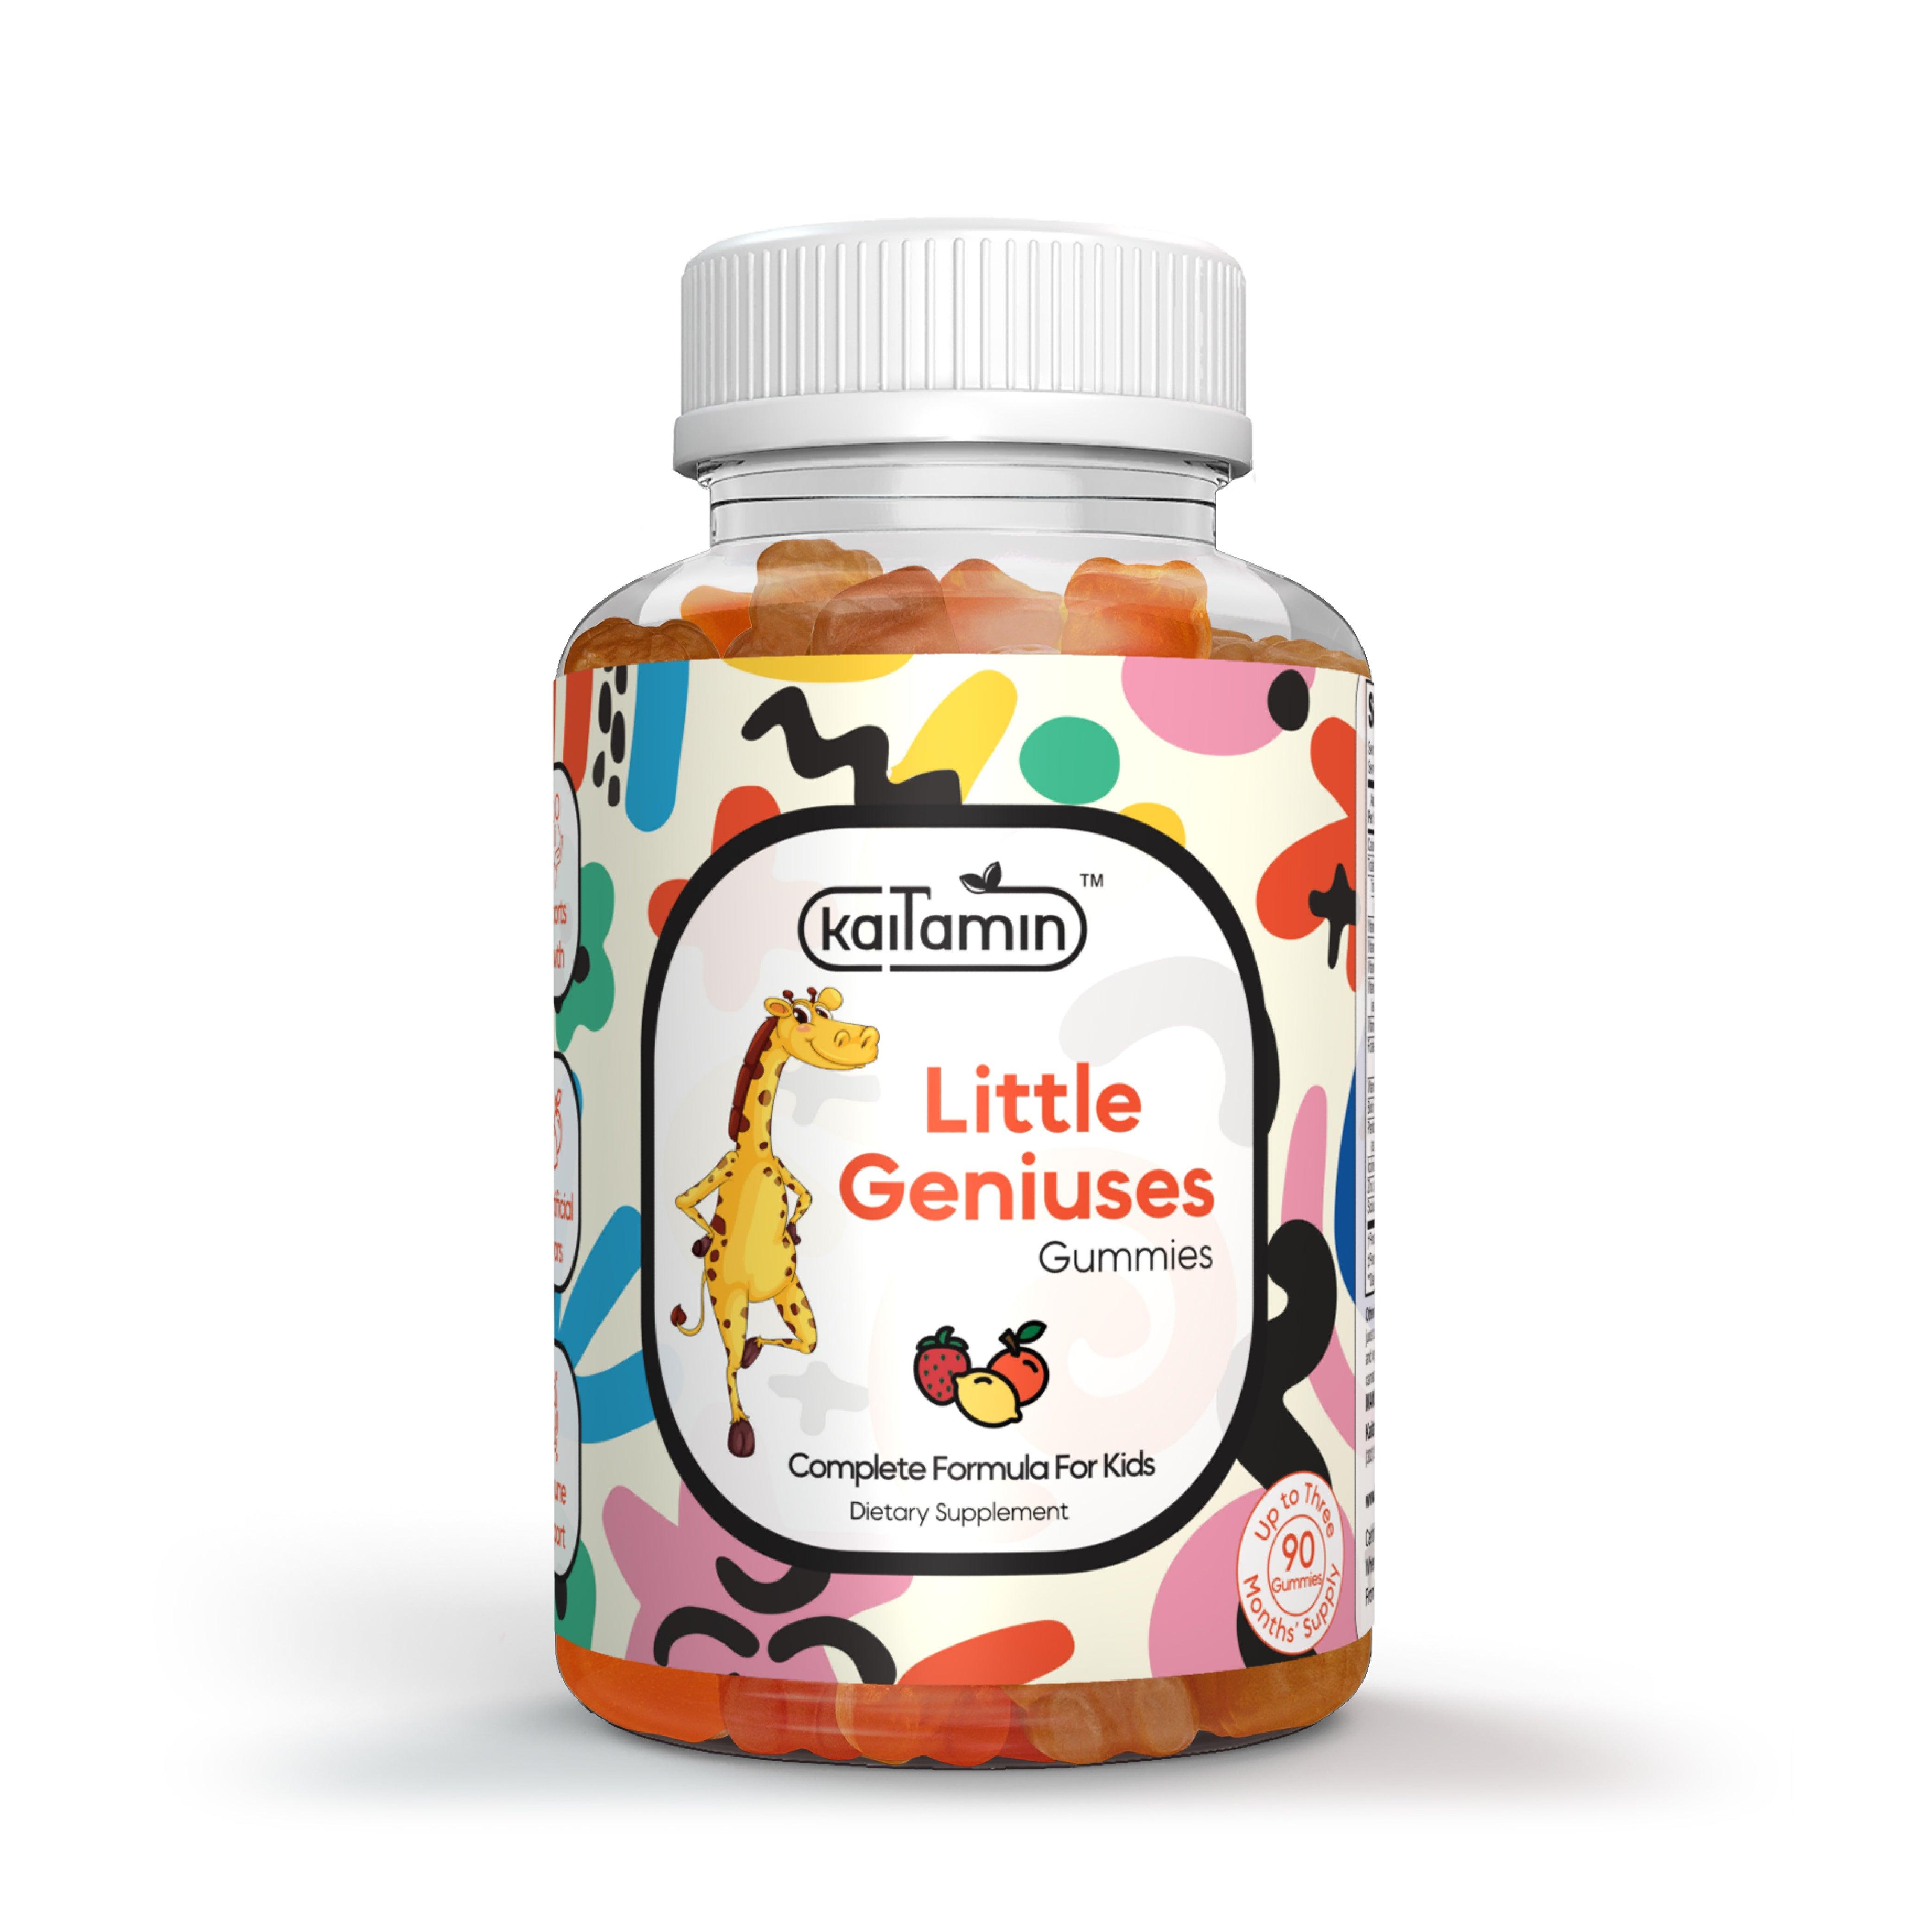 Little Geniuses Gummies - Kids Multivitamin Gummies - 90 Gummies - Kaitamin